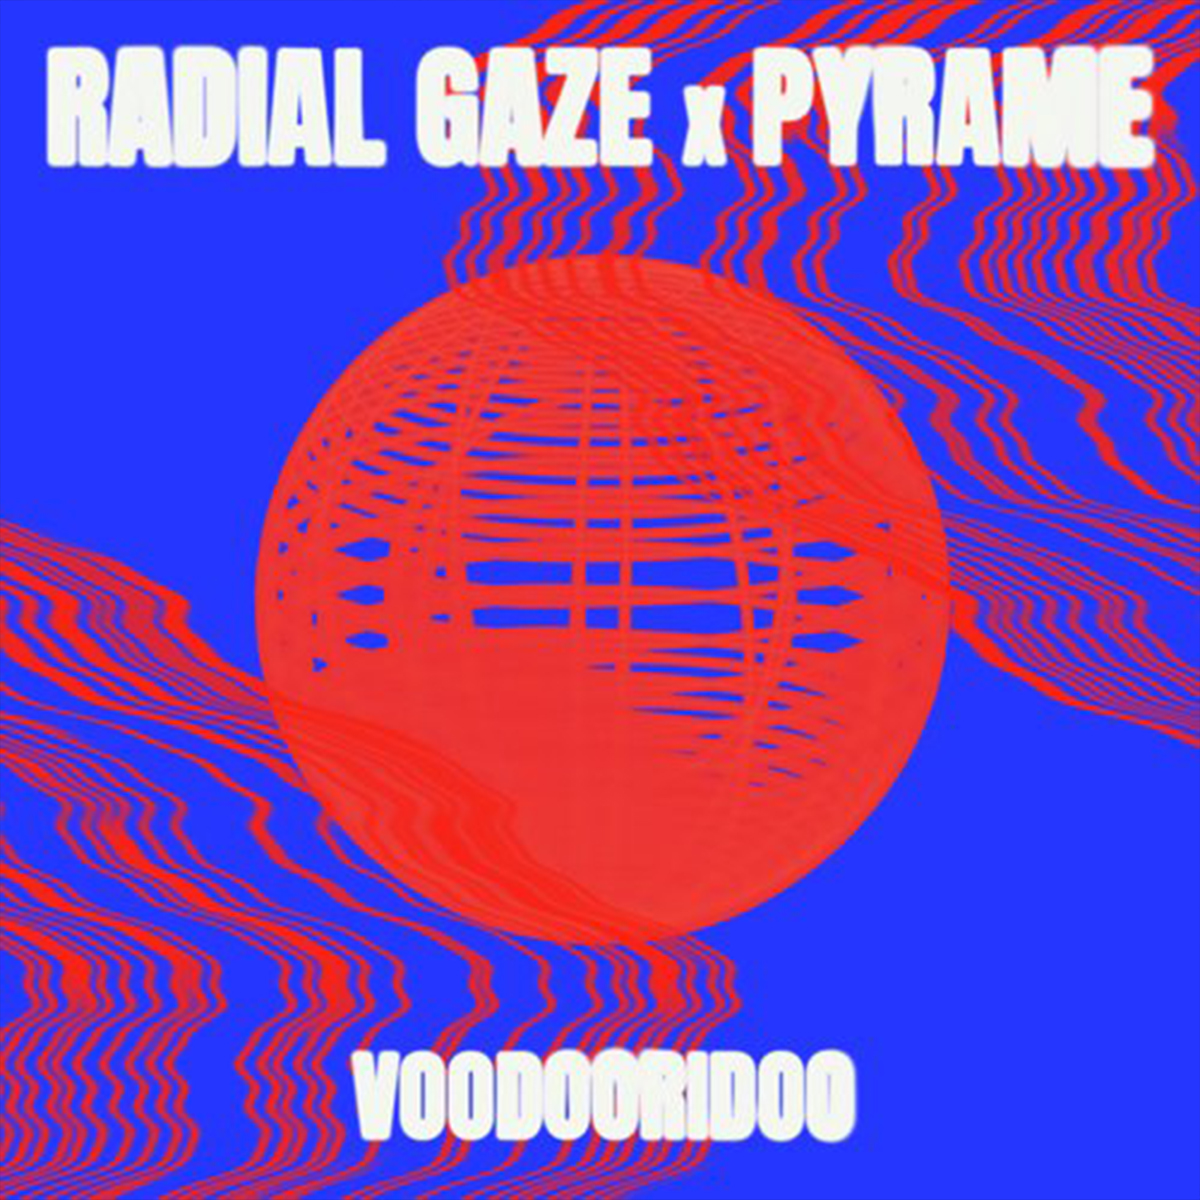 RadialGaze_x_Pyrame_Voodooridoo_3000x3000_FINAL